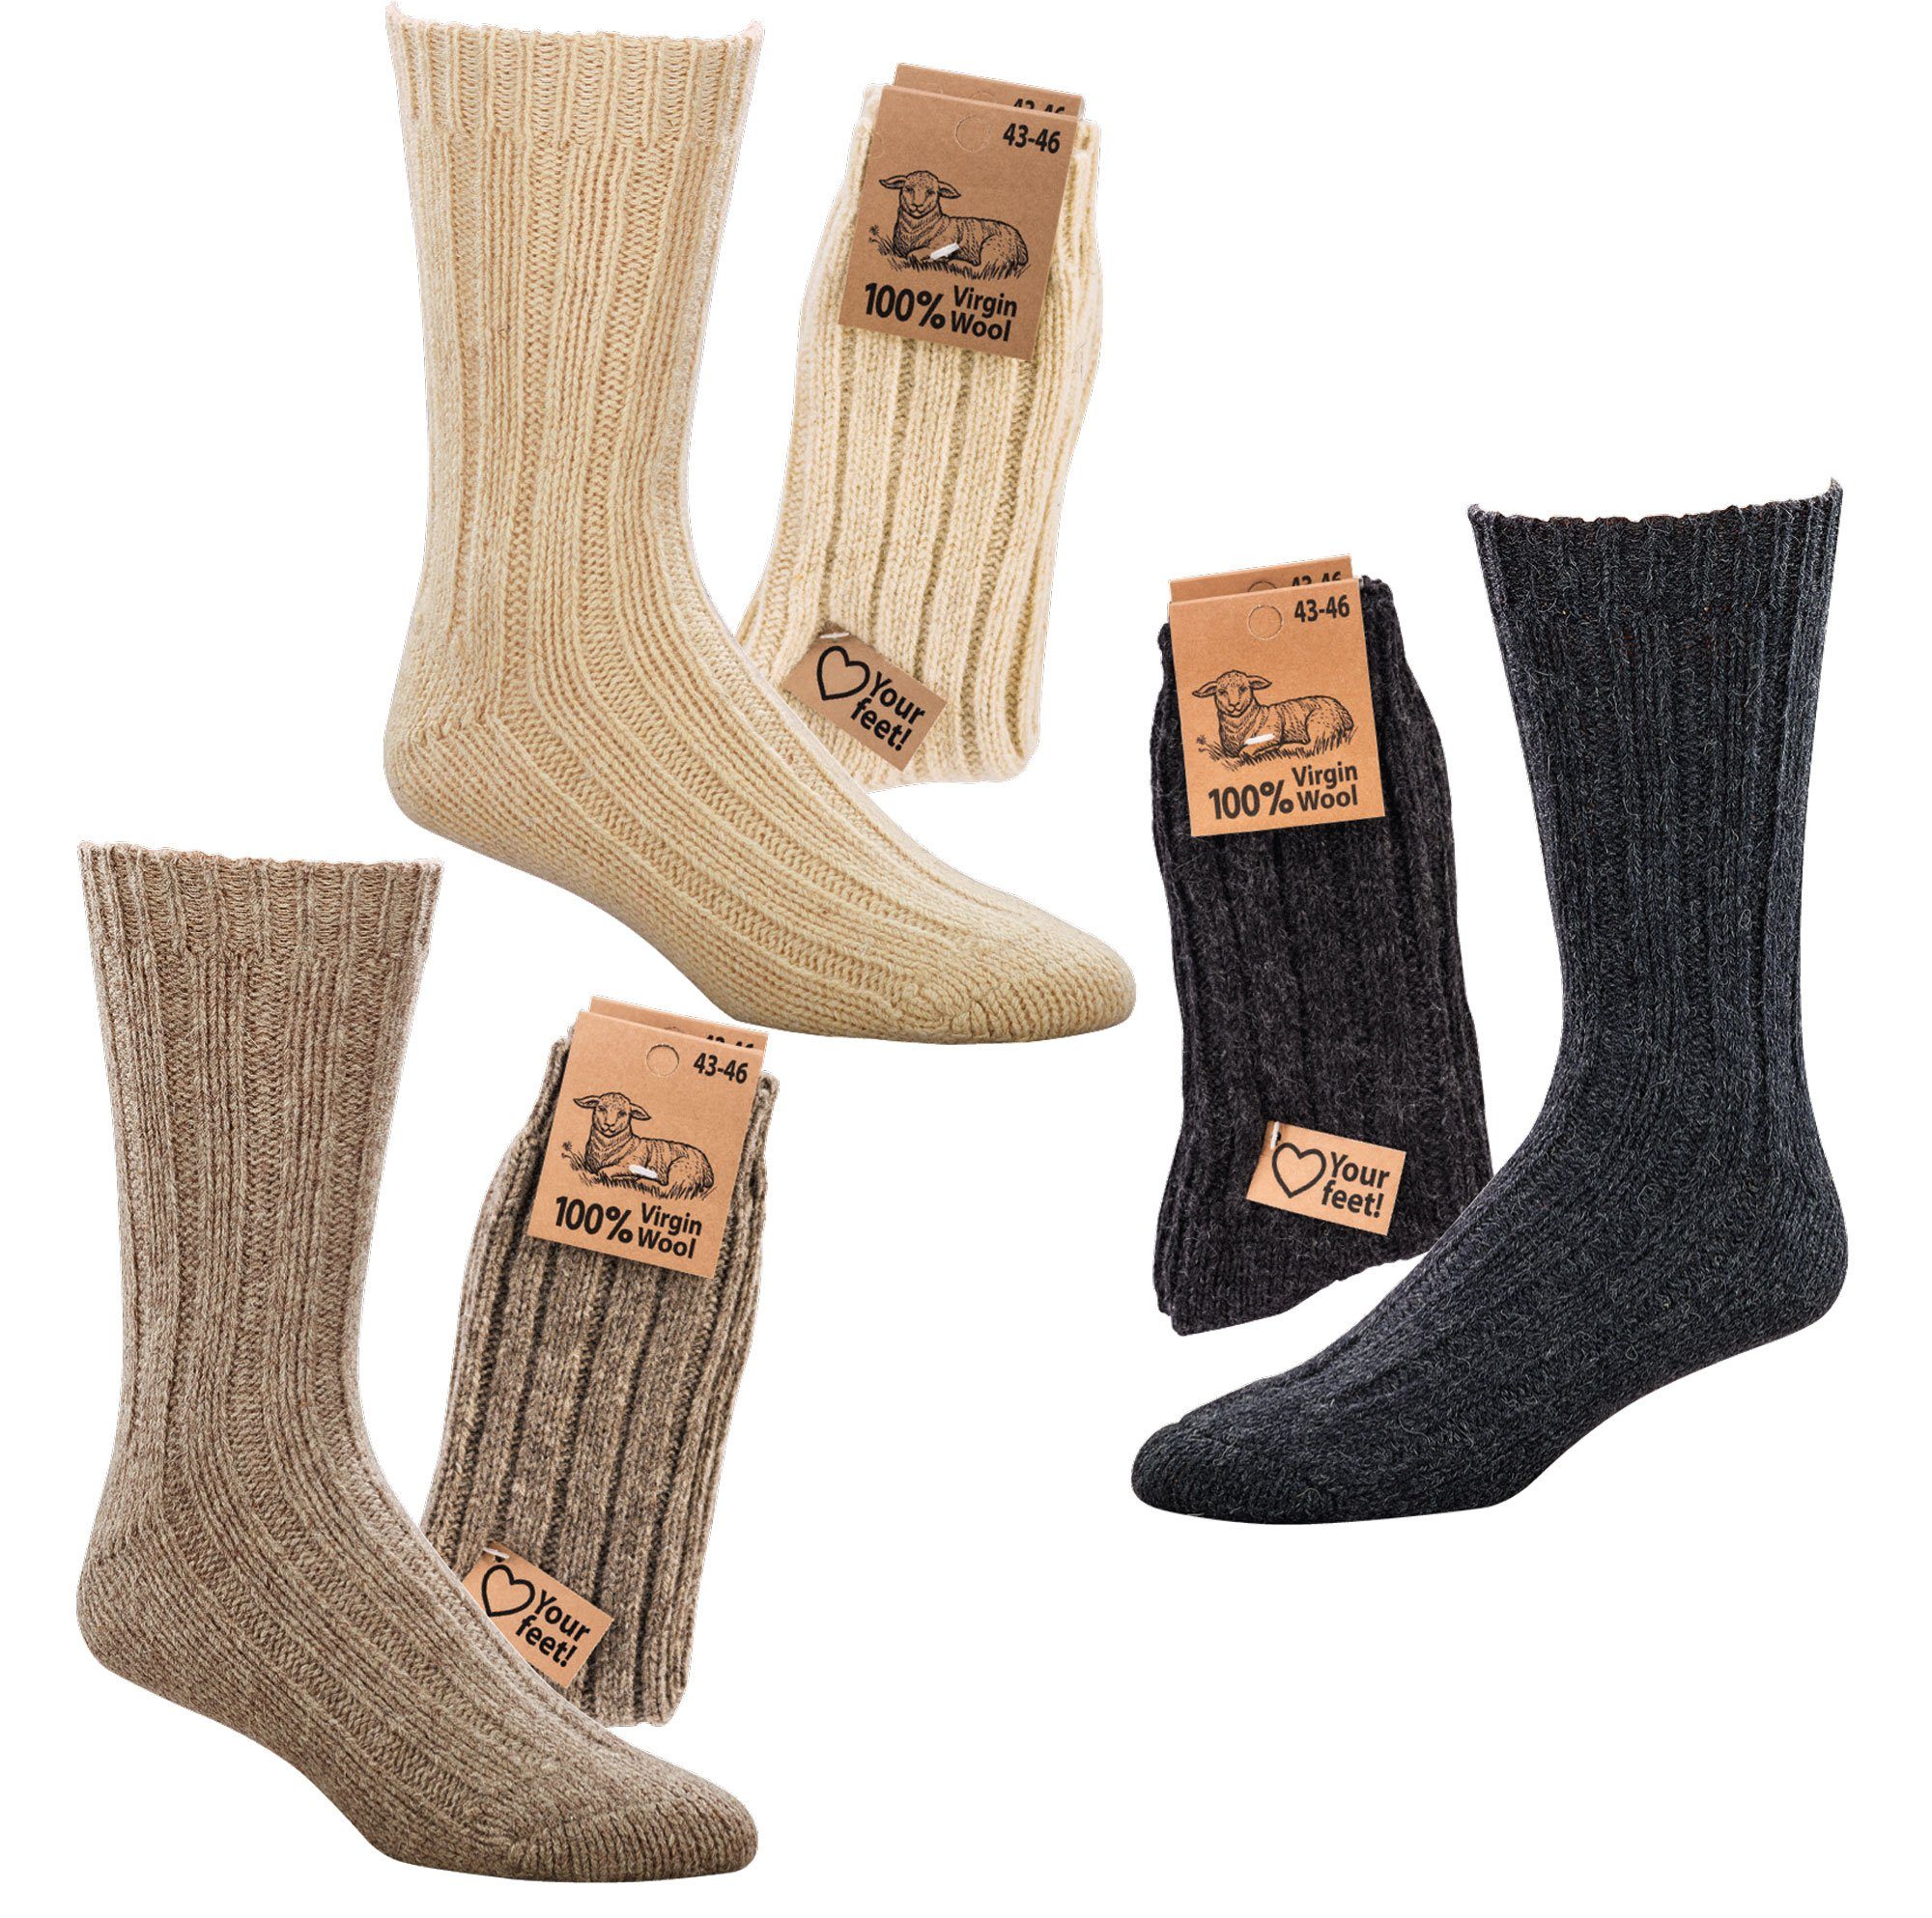 Wowerat Socken Warme Wollsocken 100% "Virgin Wool" Grobstrick Schafwolle (2 Paar) anthrazit